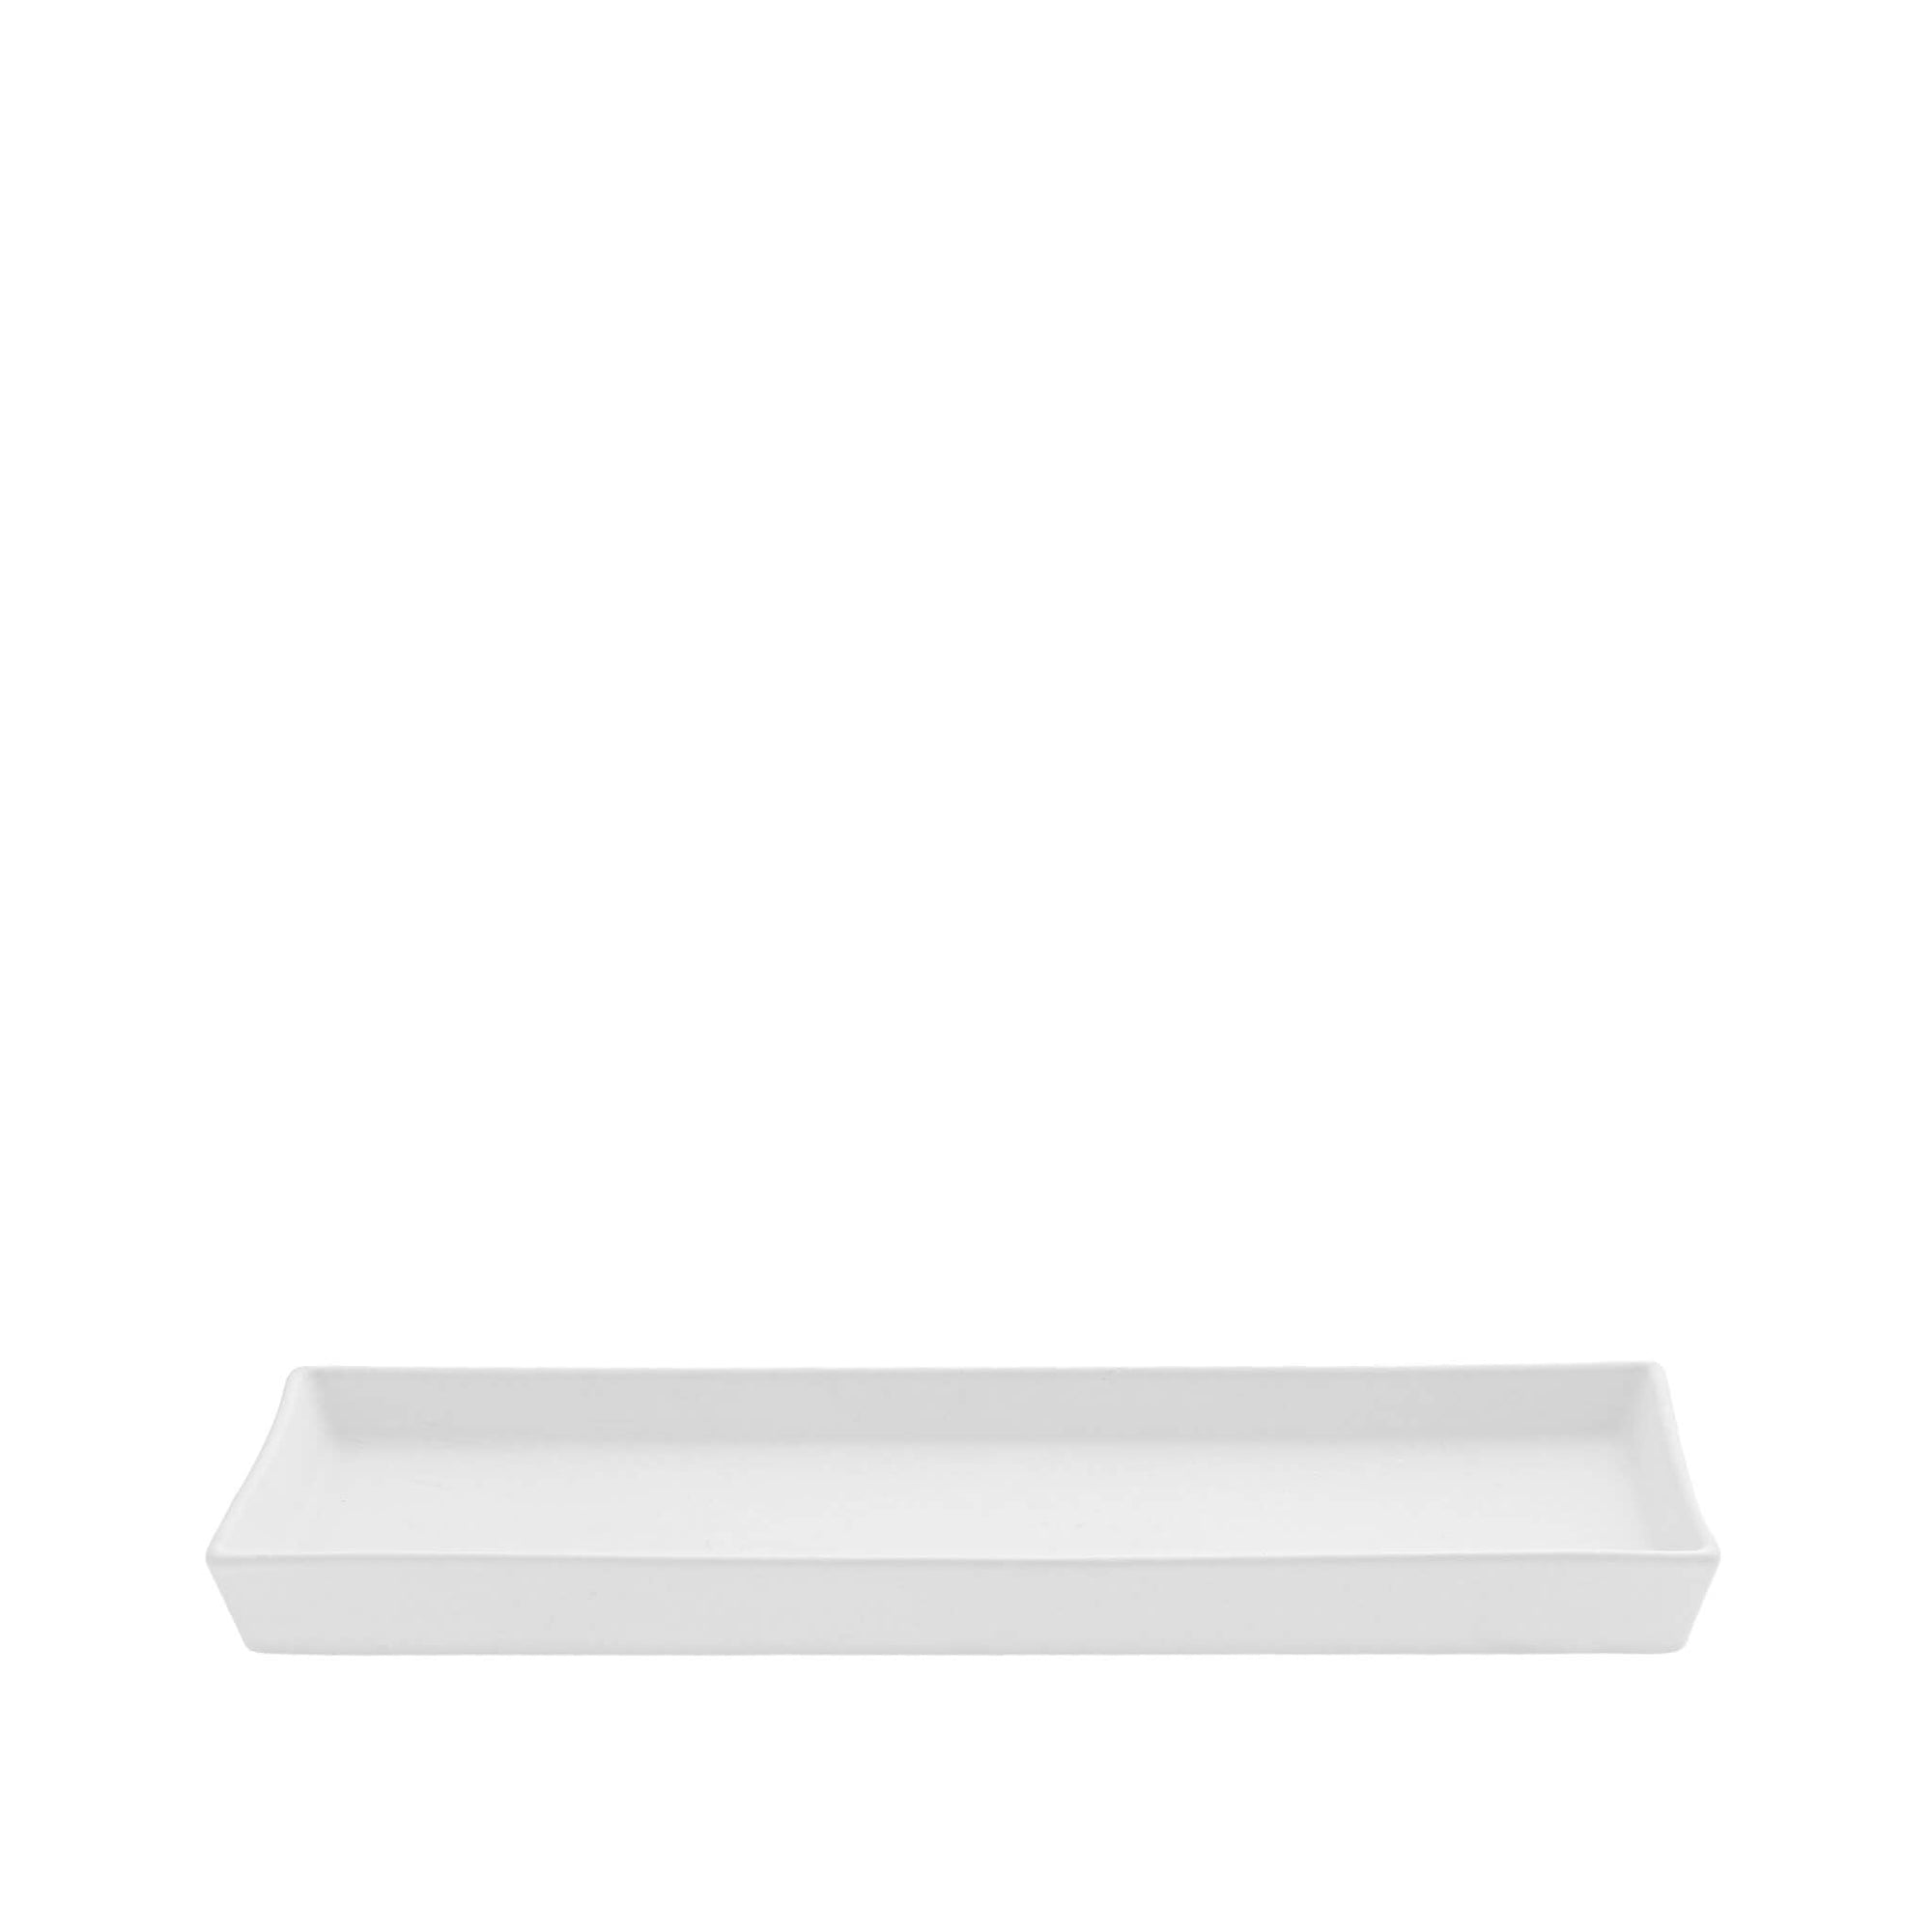 Storefactory Långsand rectangular tray - 566101 white